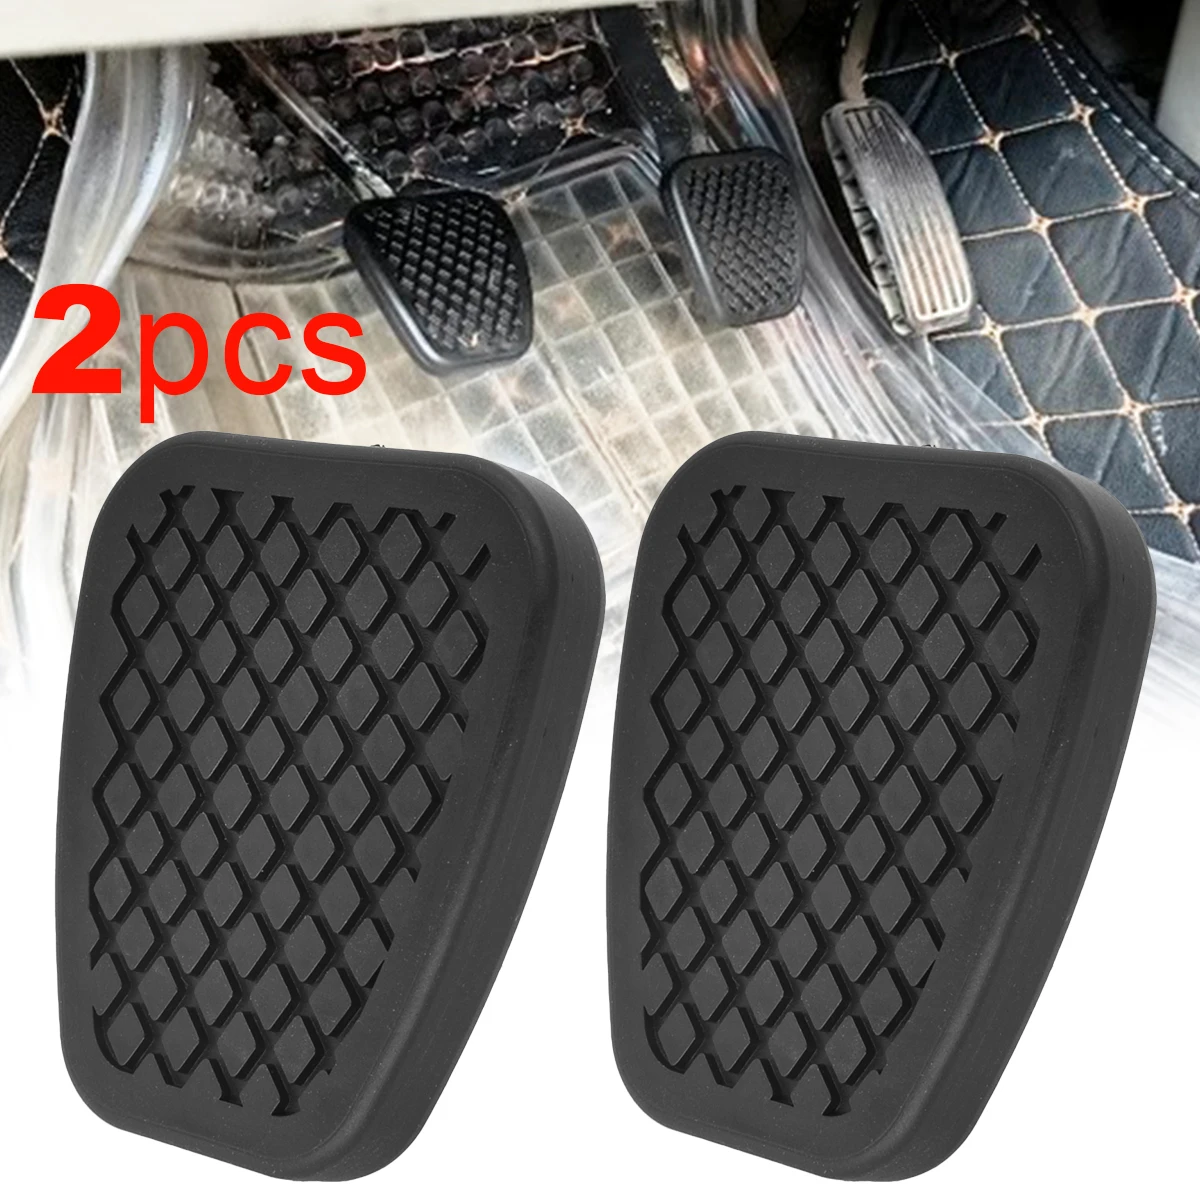 2pcs for honda jazz fit civic hrv crv car rubber brake clutch foot pedal pad covers thumb200